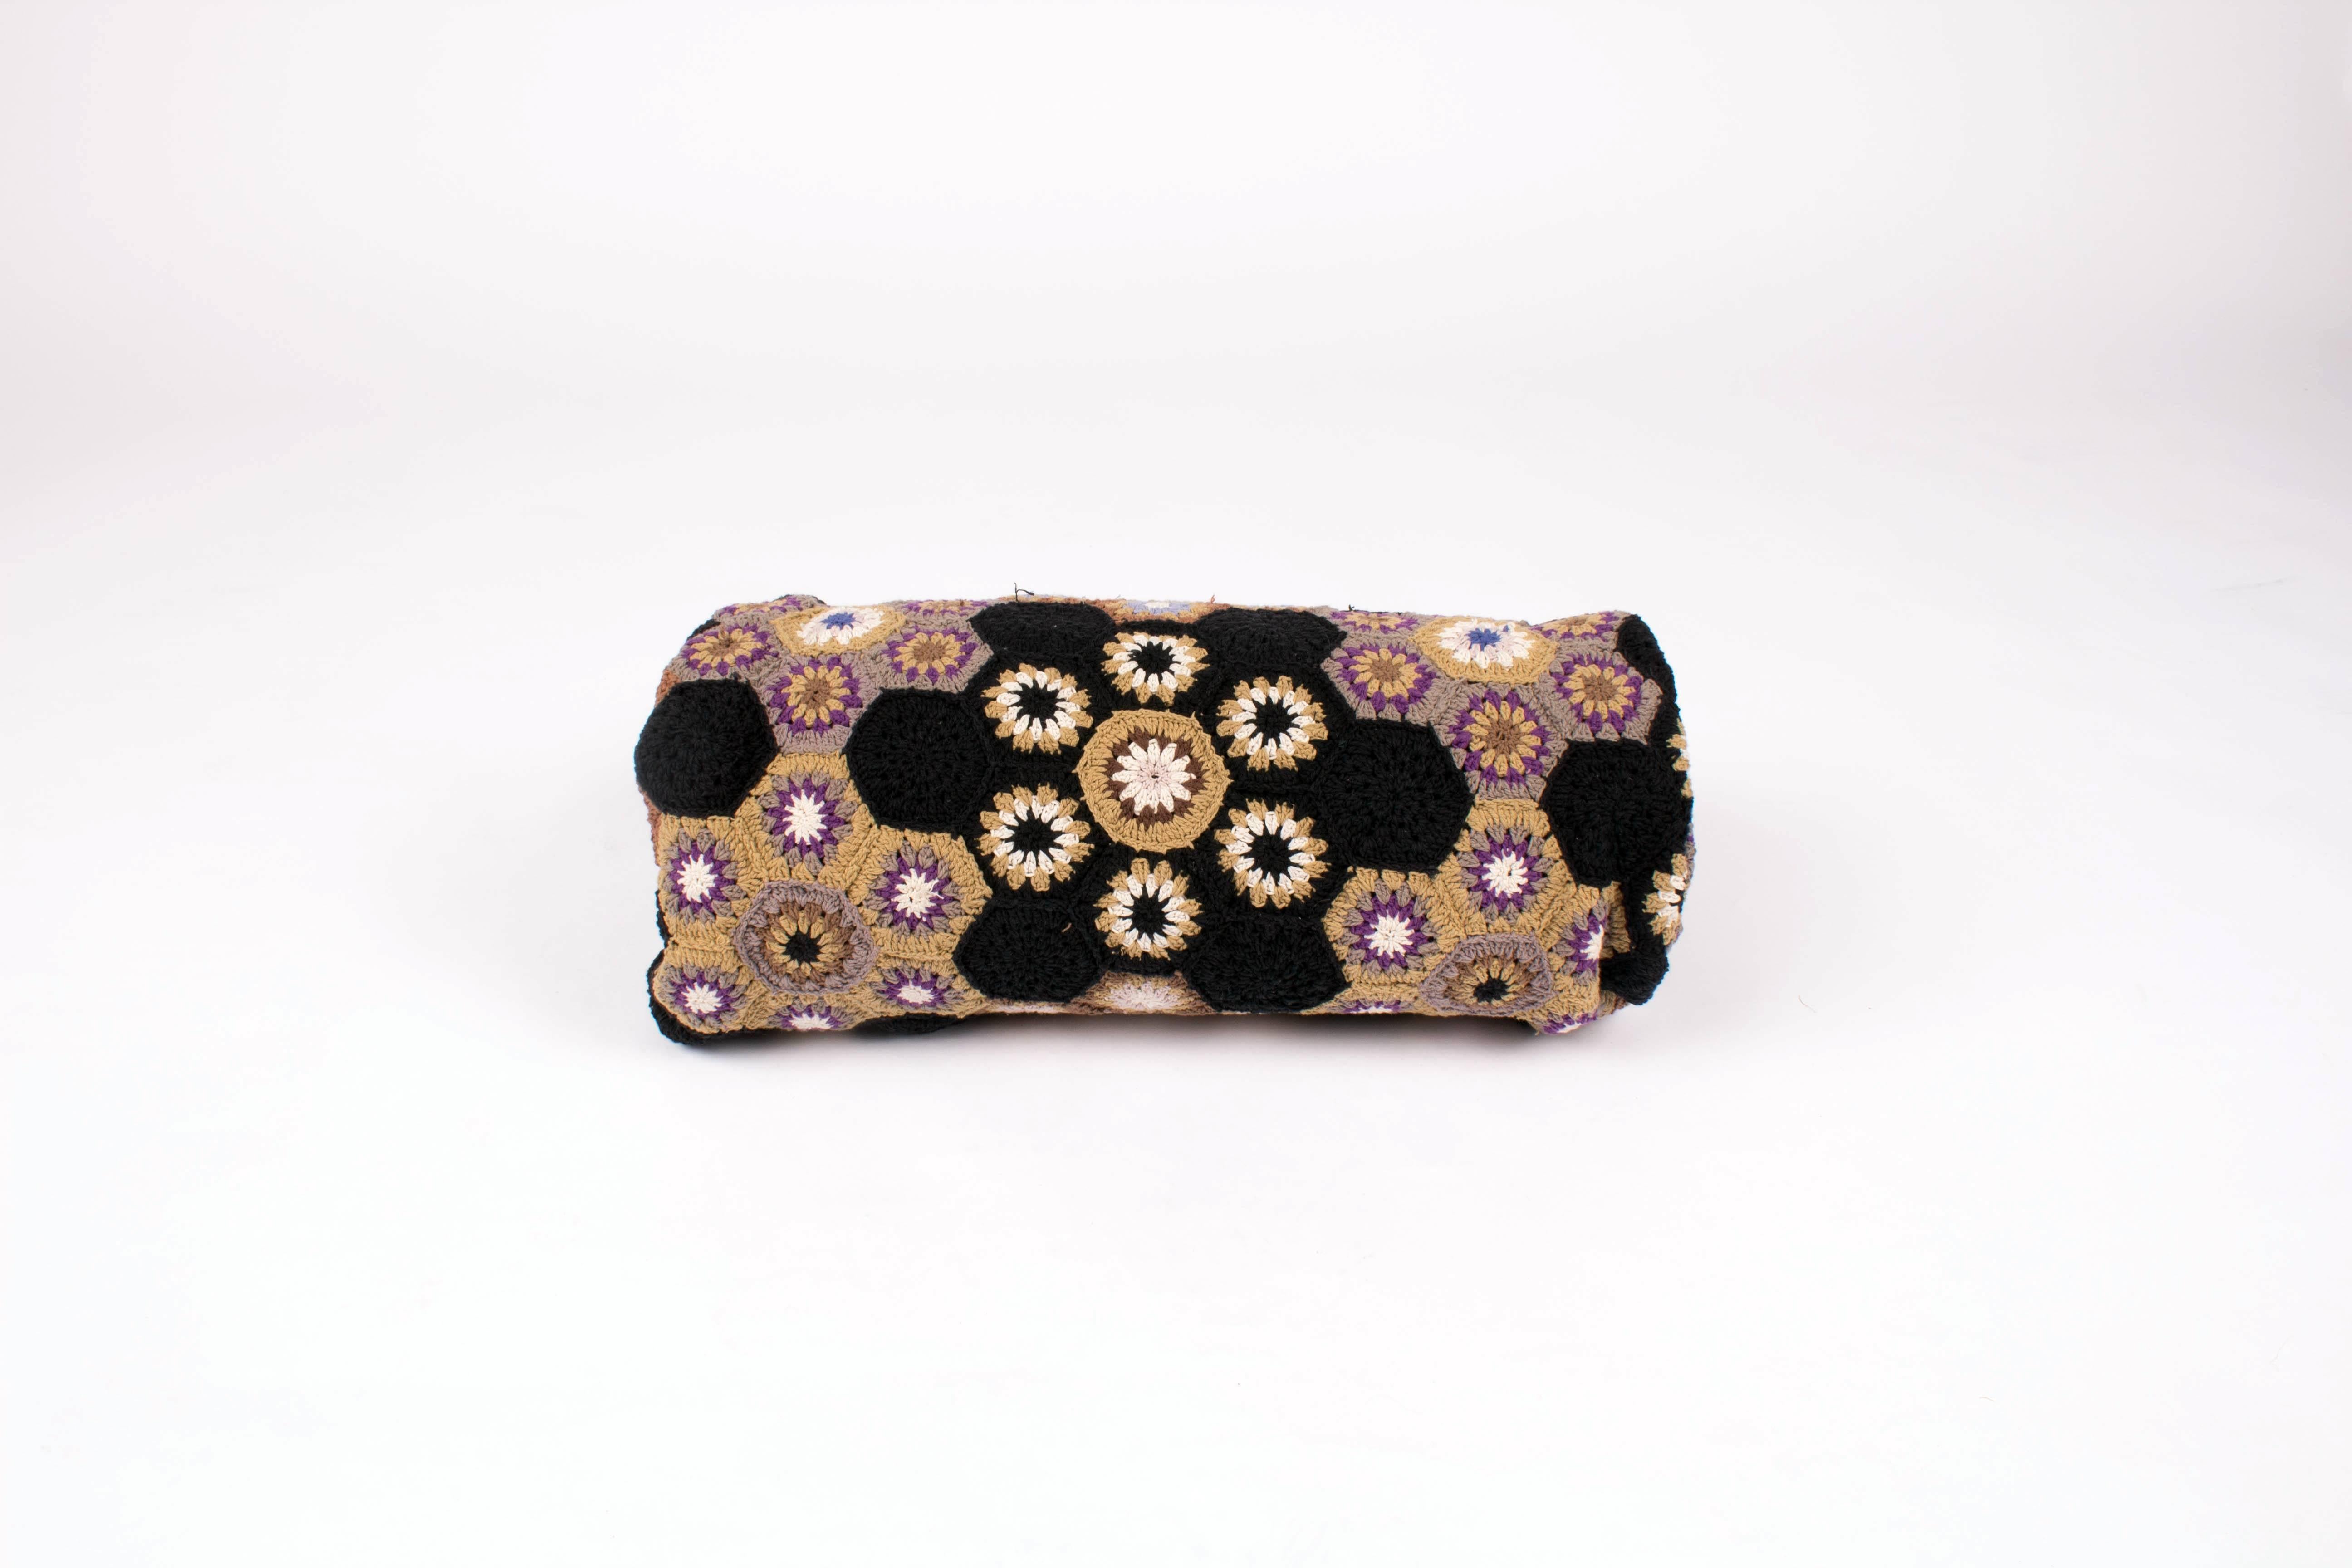 Asian Art Deco Style Crocheted Medallion Blanket Throw 03 Black Orange and Purple  For Sale